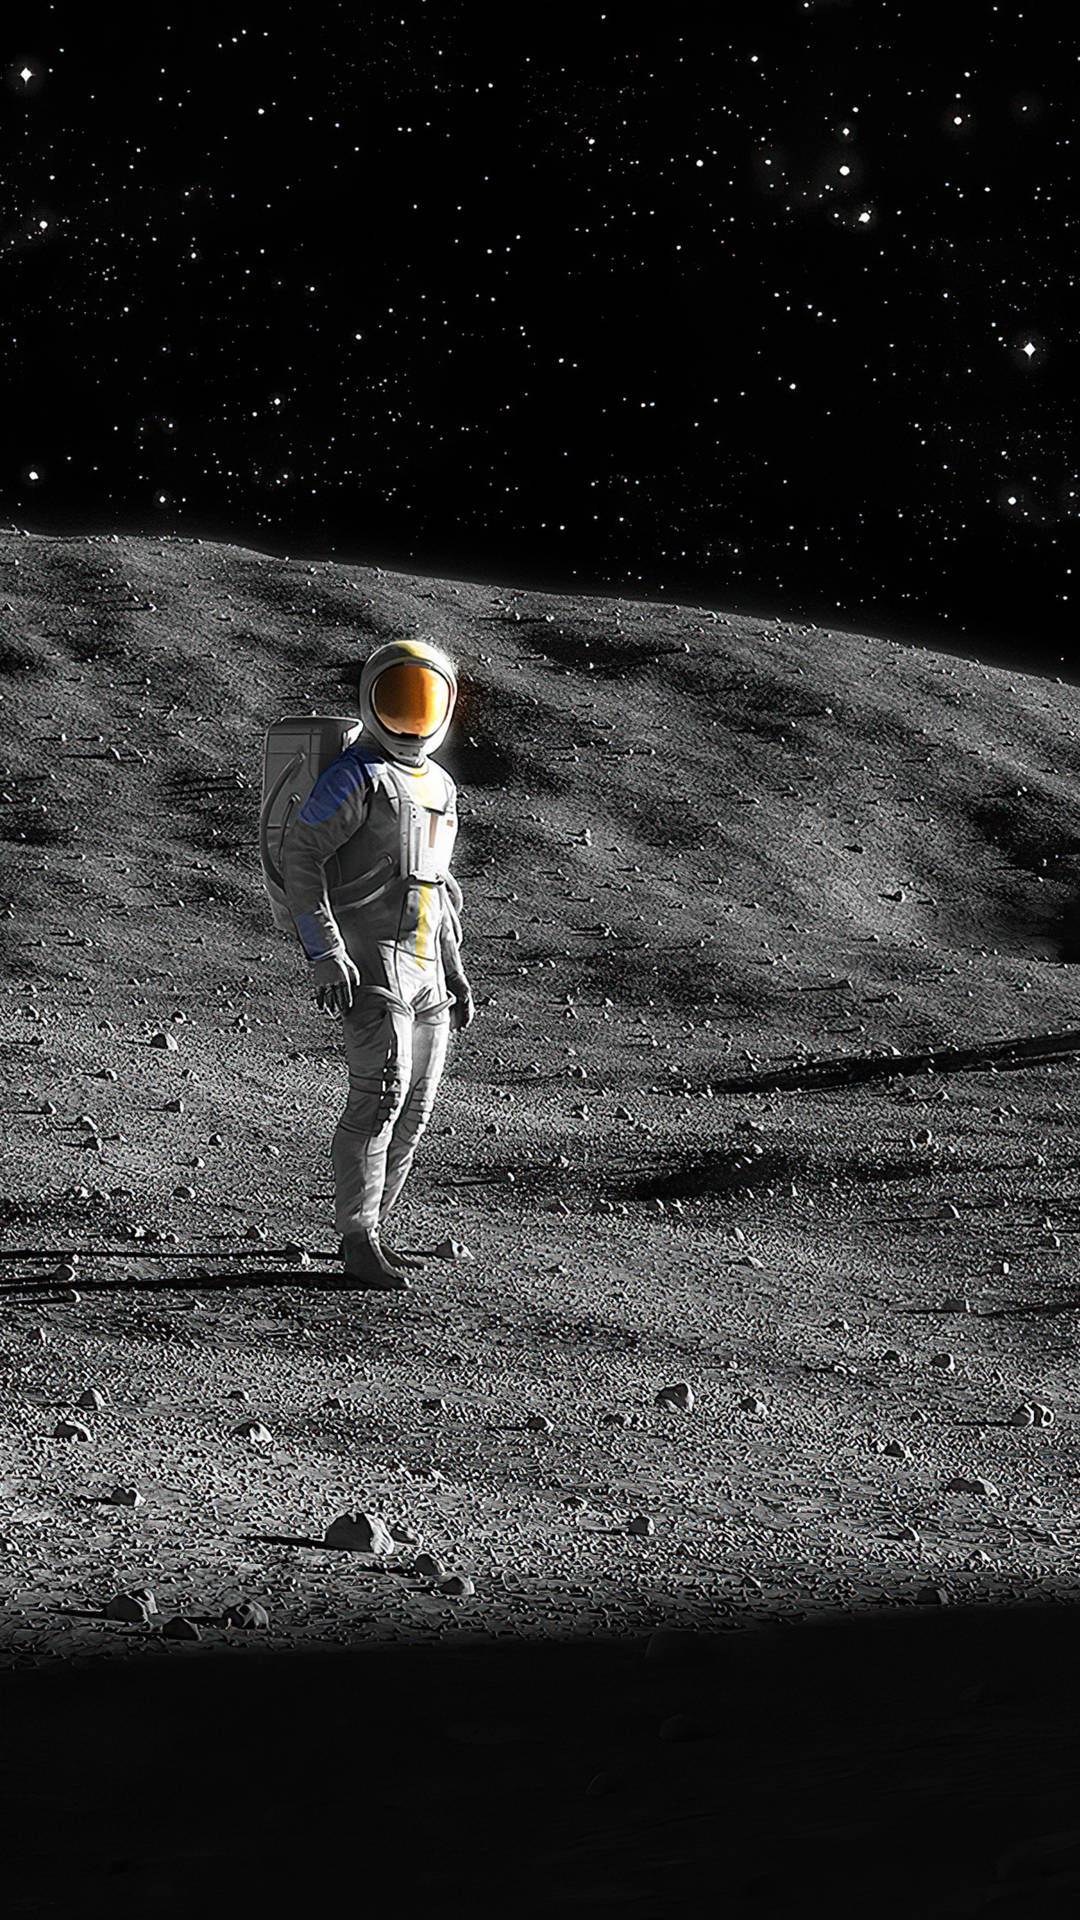 Black And White Astronaut Moon Land Portrait Wallpaper